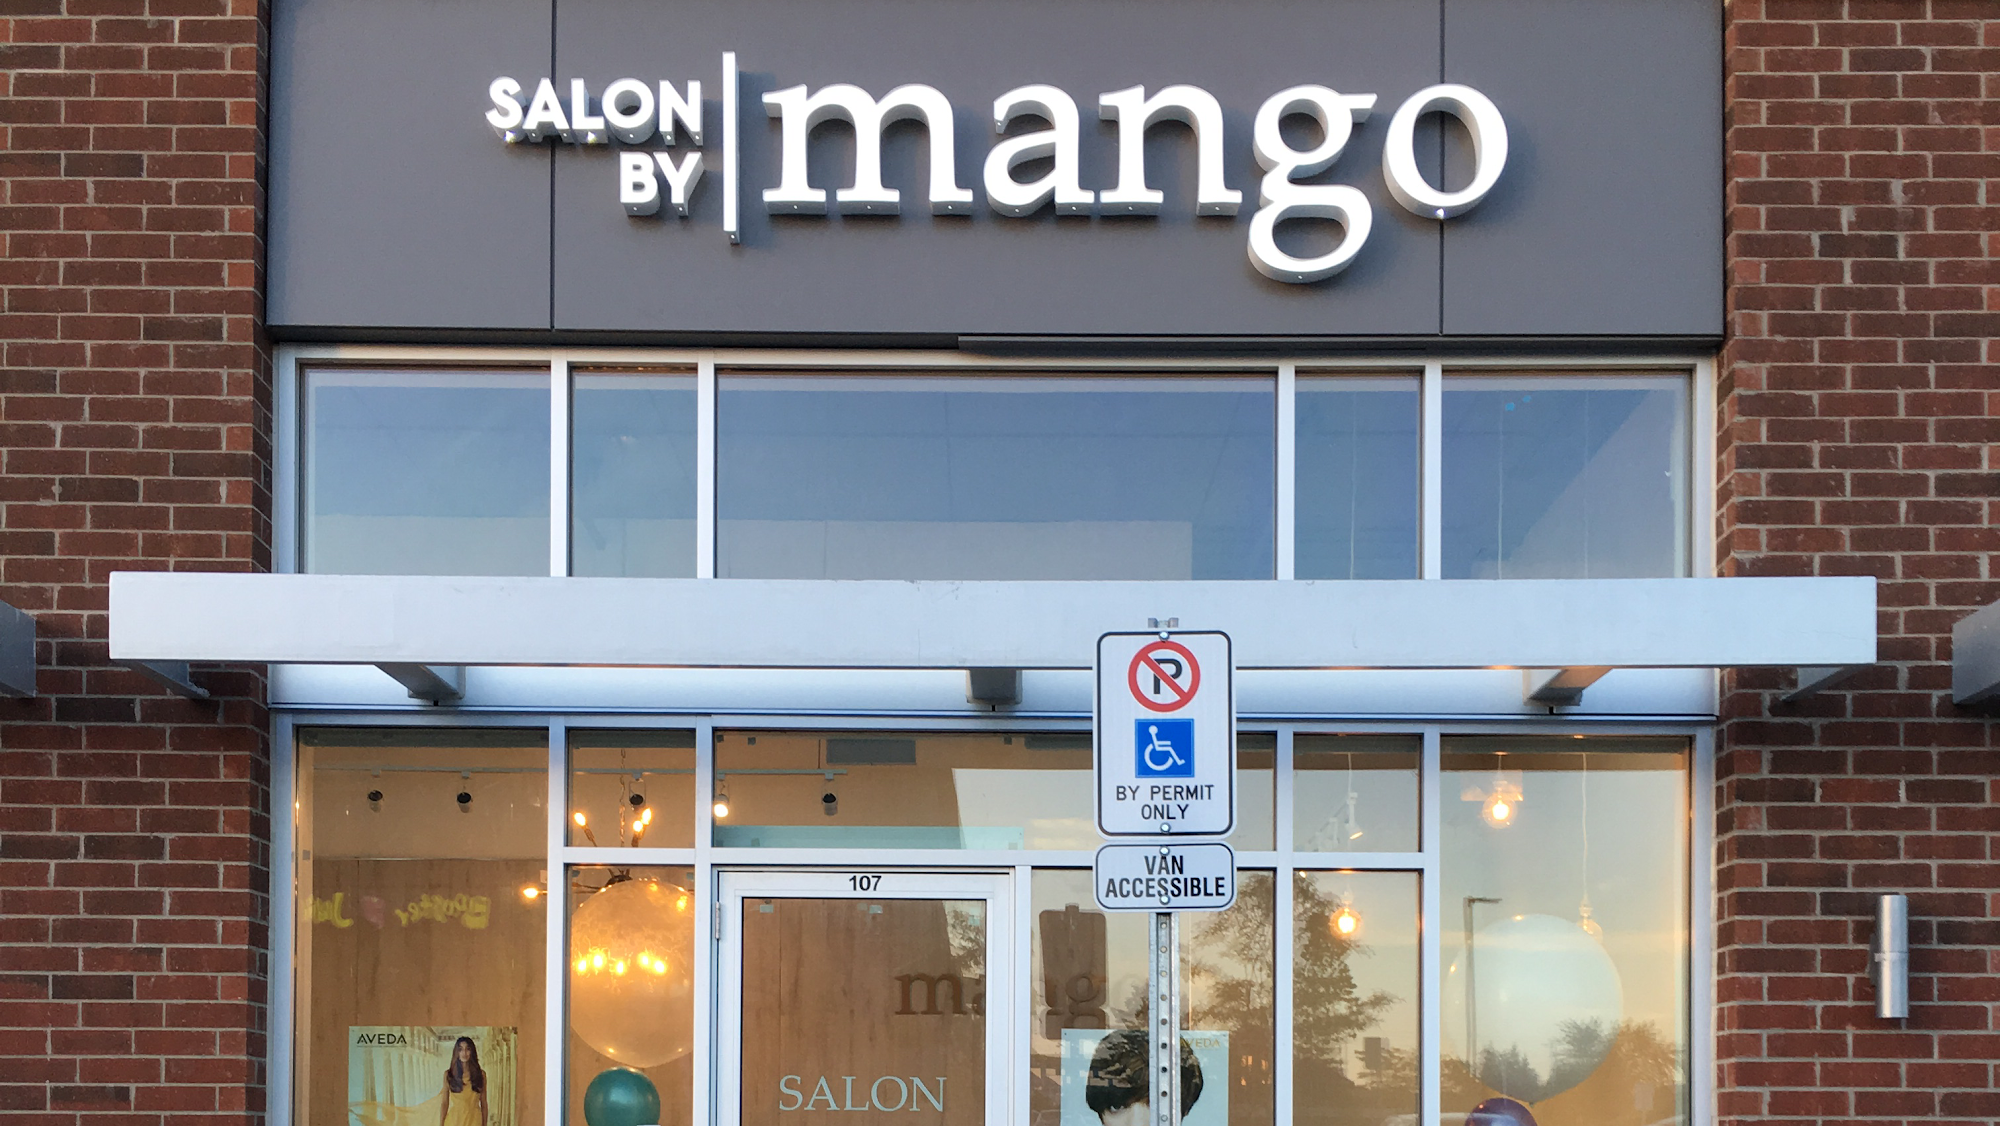 SALON by mango